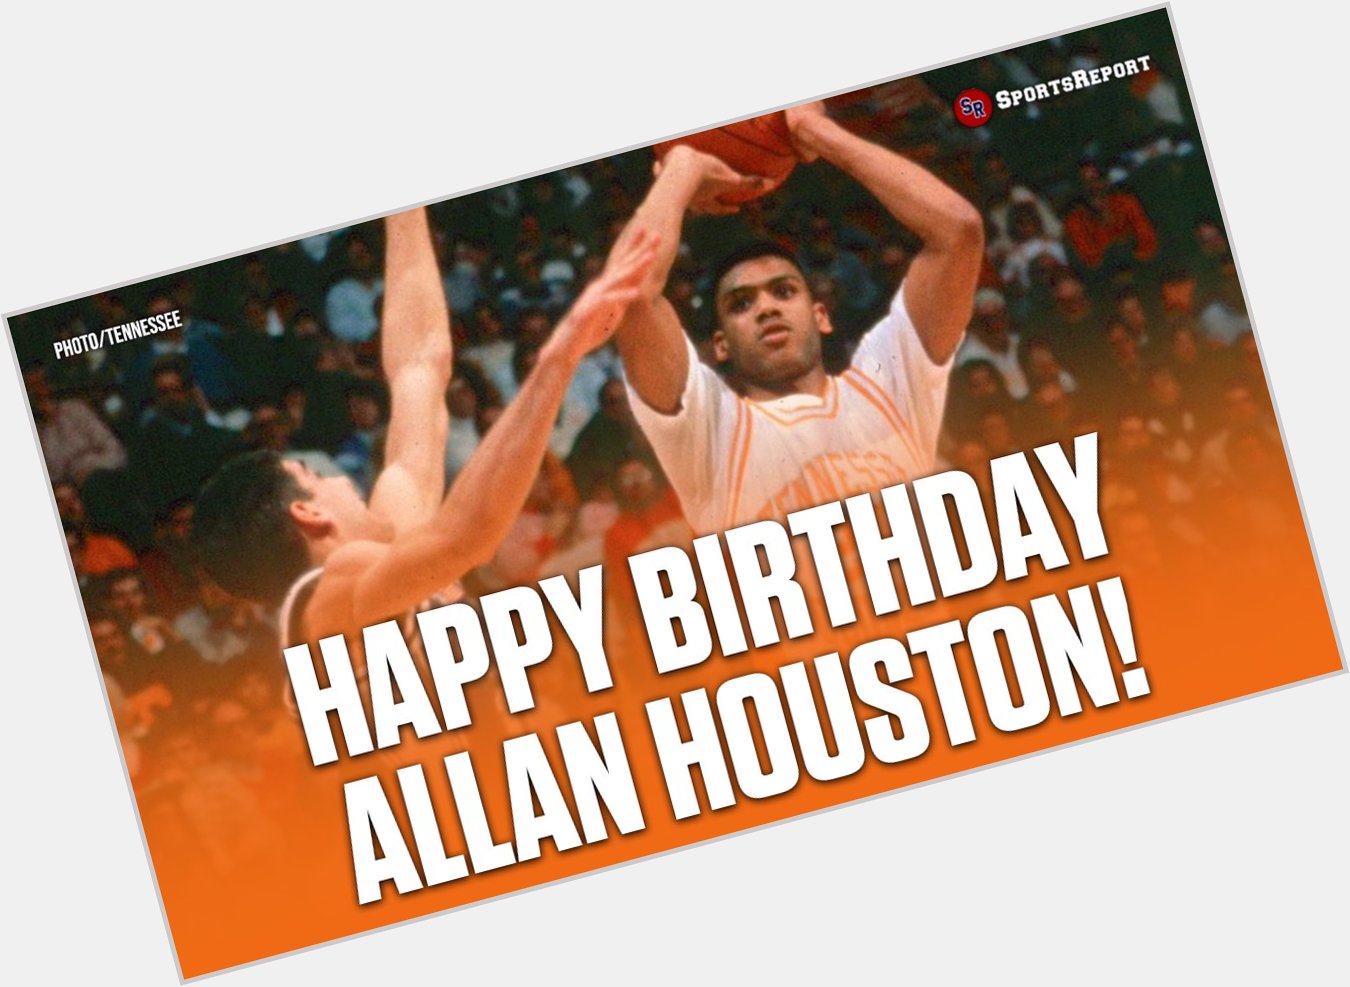  Fans, let\s wish Legend Allan Houston a Happy Birthday! 